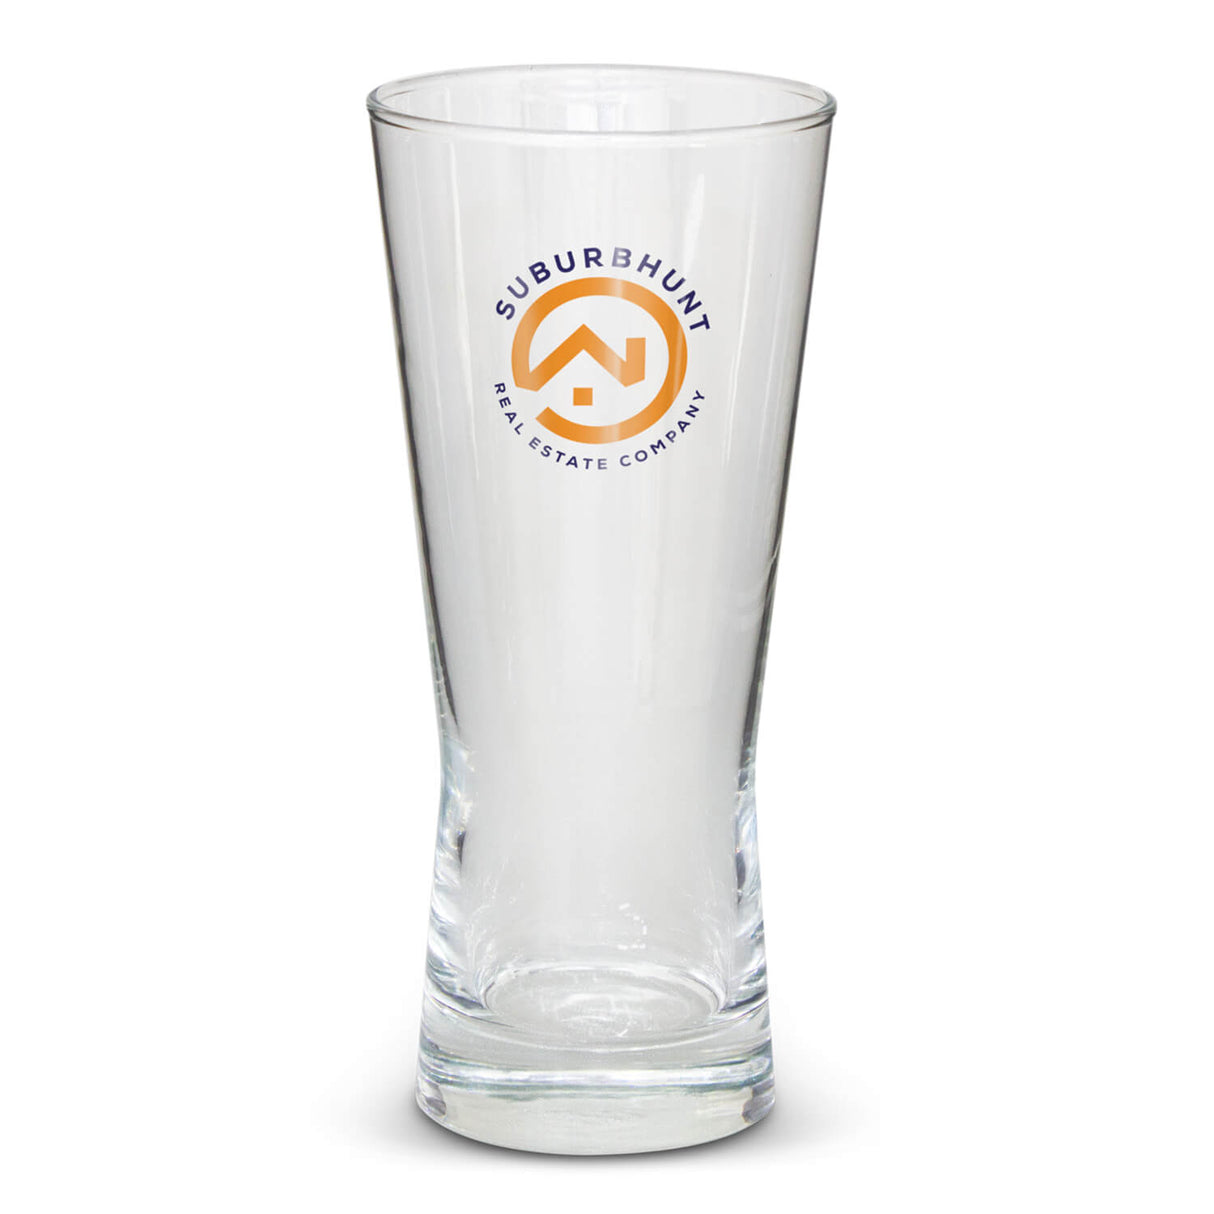 Soho Beer Glass 400ml - Printed